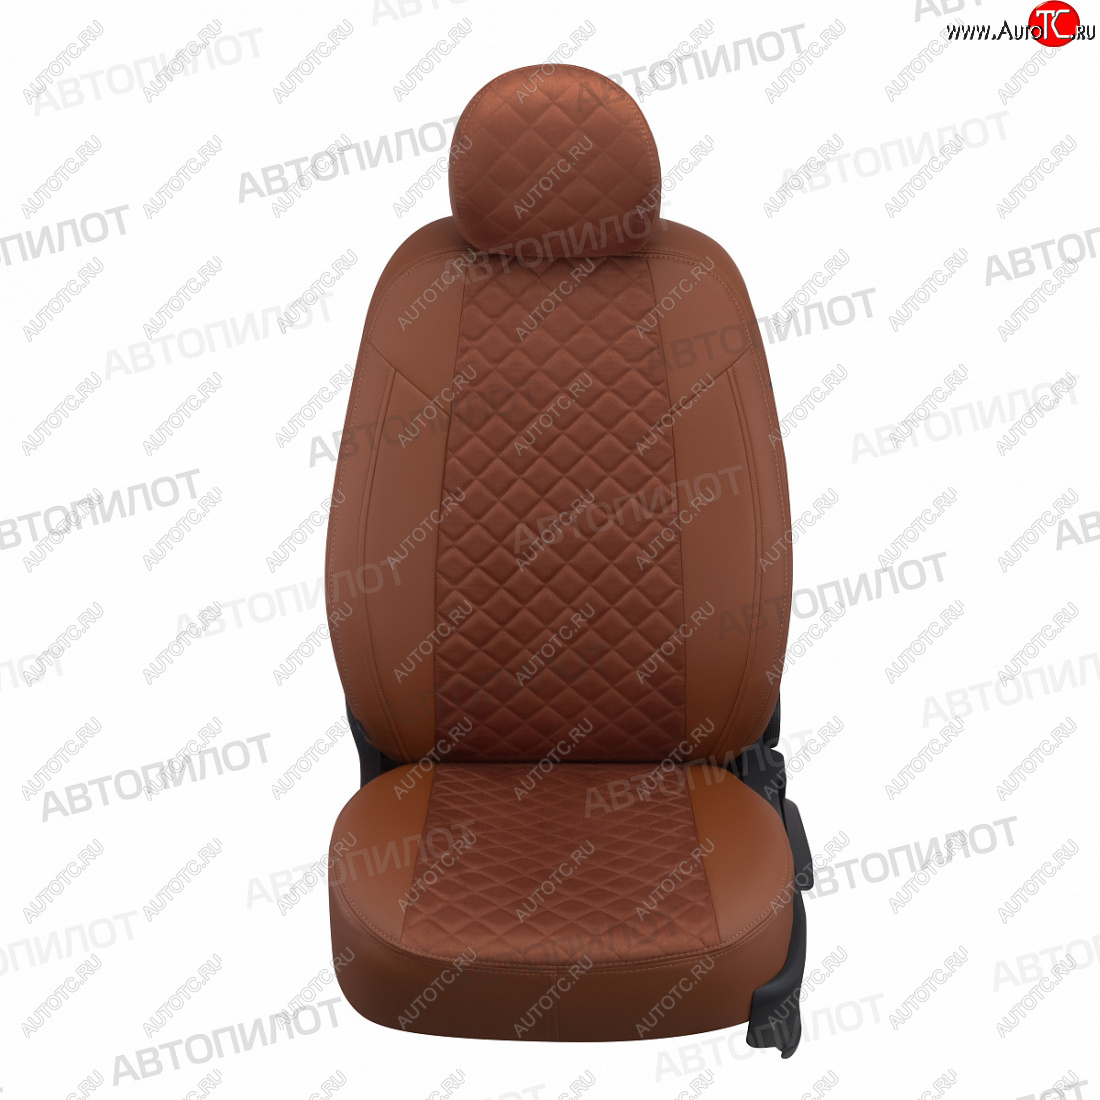 21 599 р. Чехлы сидений (экокожа/алькантара, 8 мест) Автопилот Ромб  KIA Carnival  KA4 (2020-2024) (коричневый)